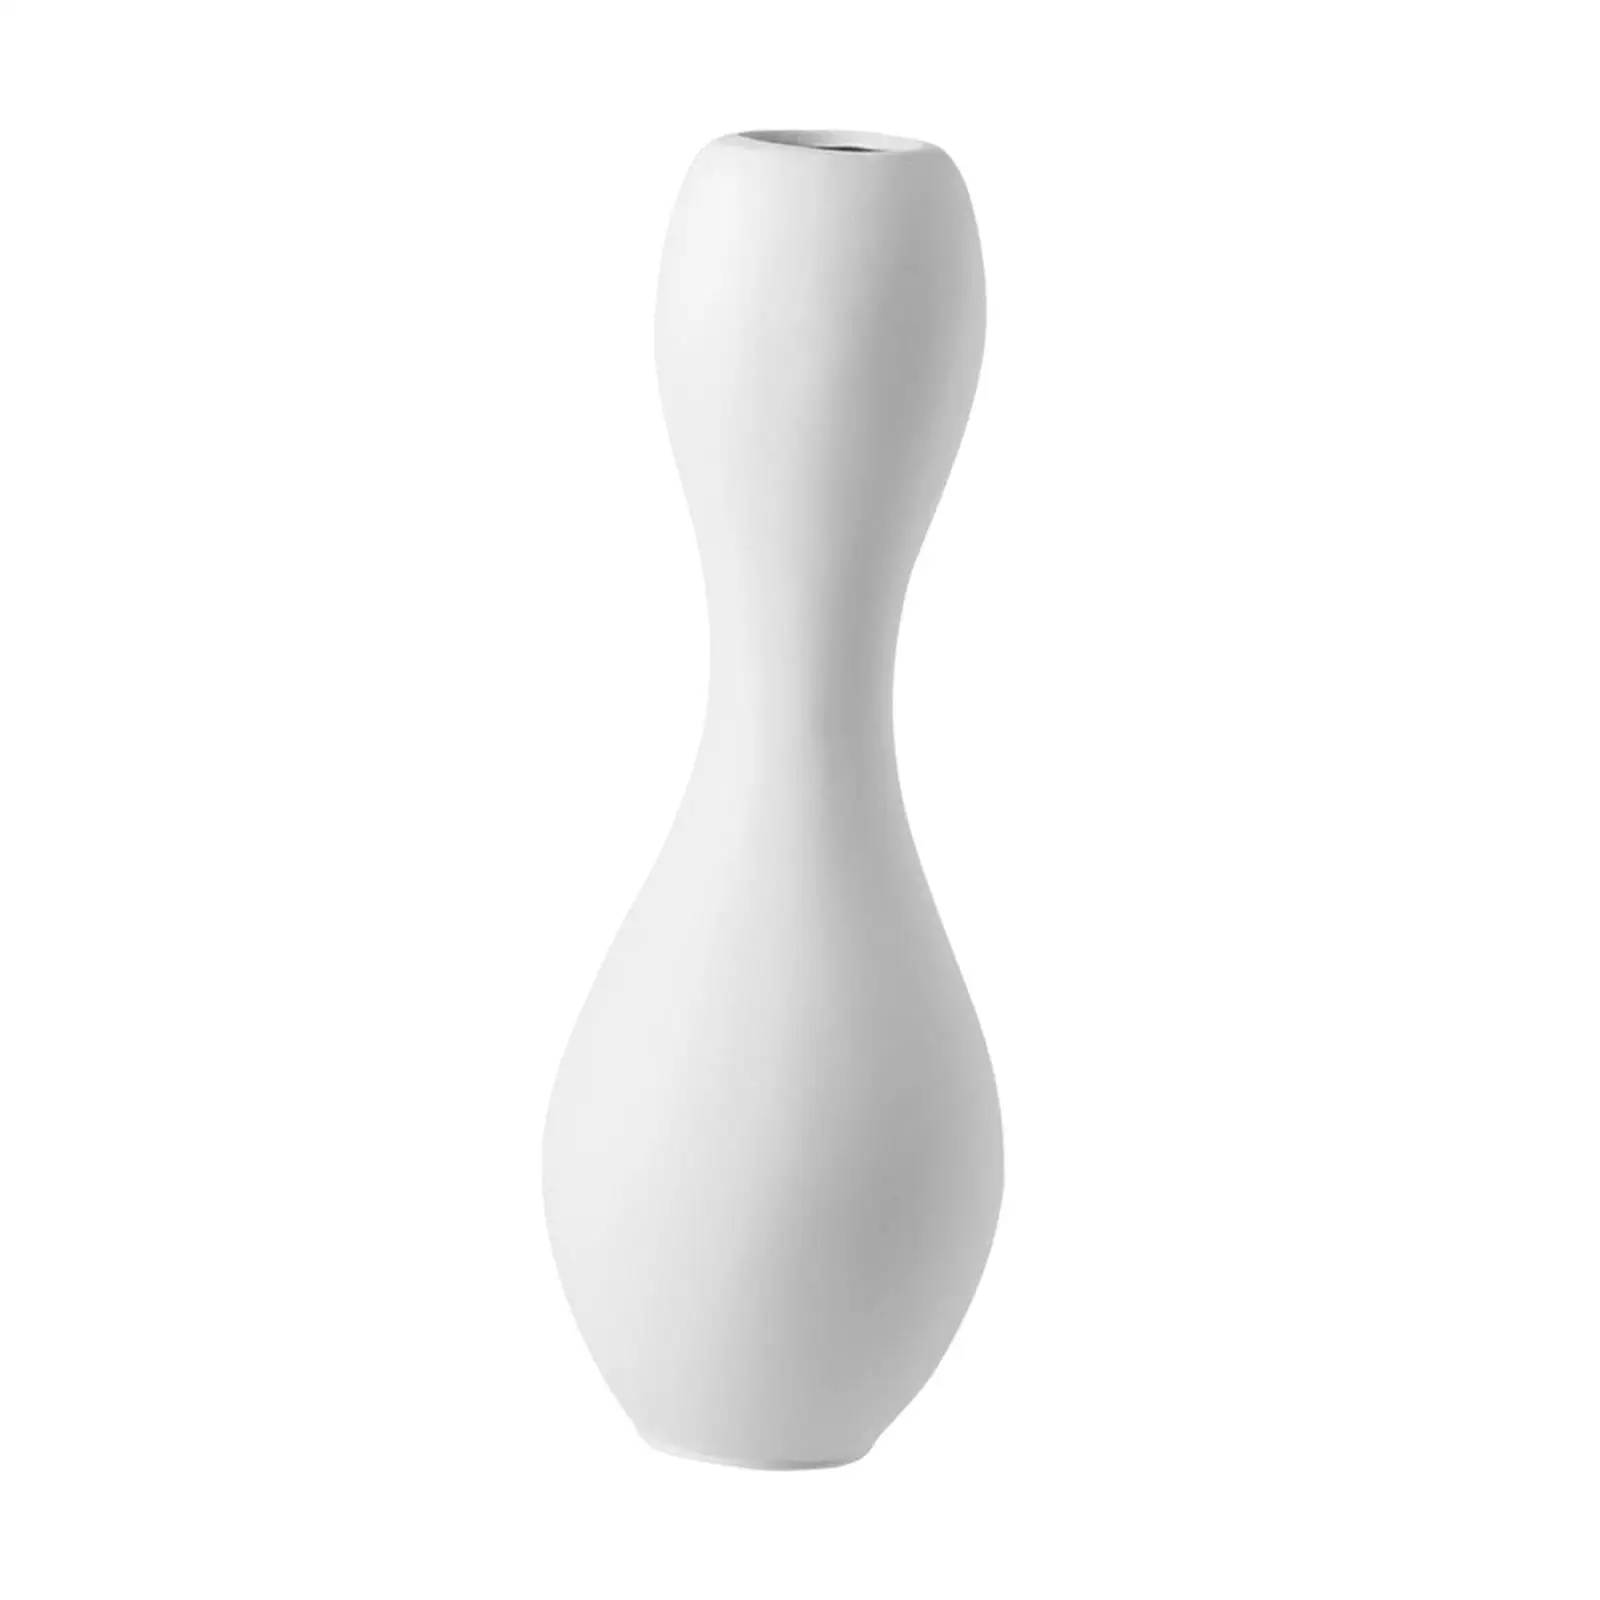 Nordic Style Ceramic Vase Decorative Vase Modern Minimalist Bowling Pin Centerpiece Elegant for Home Bedroom Office Desk Decor